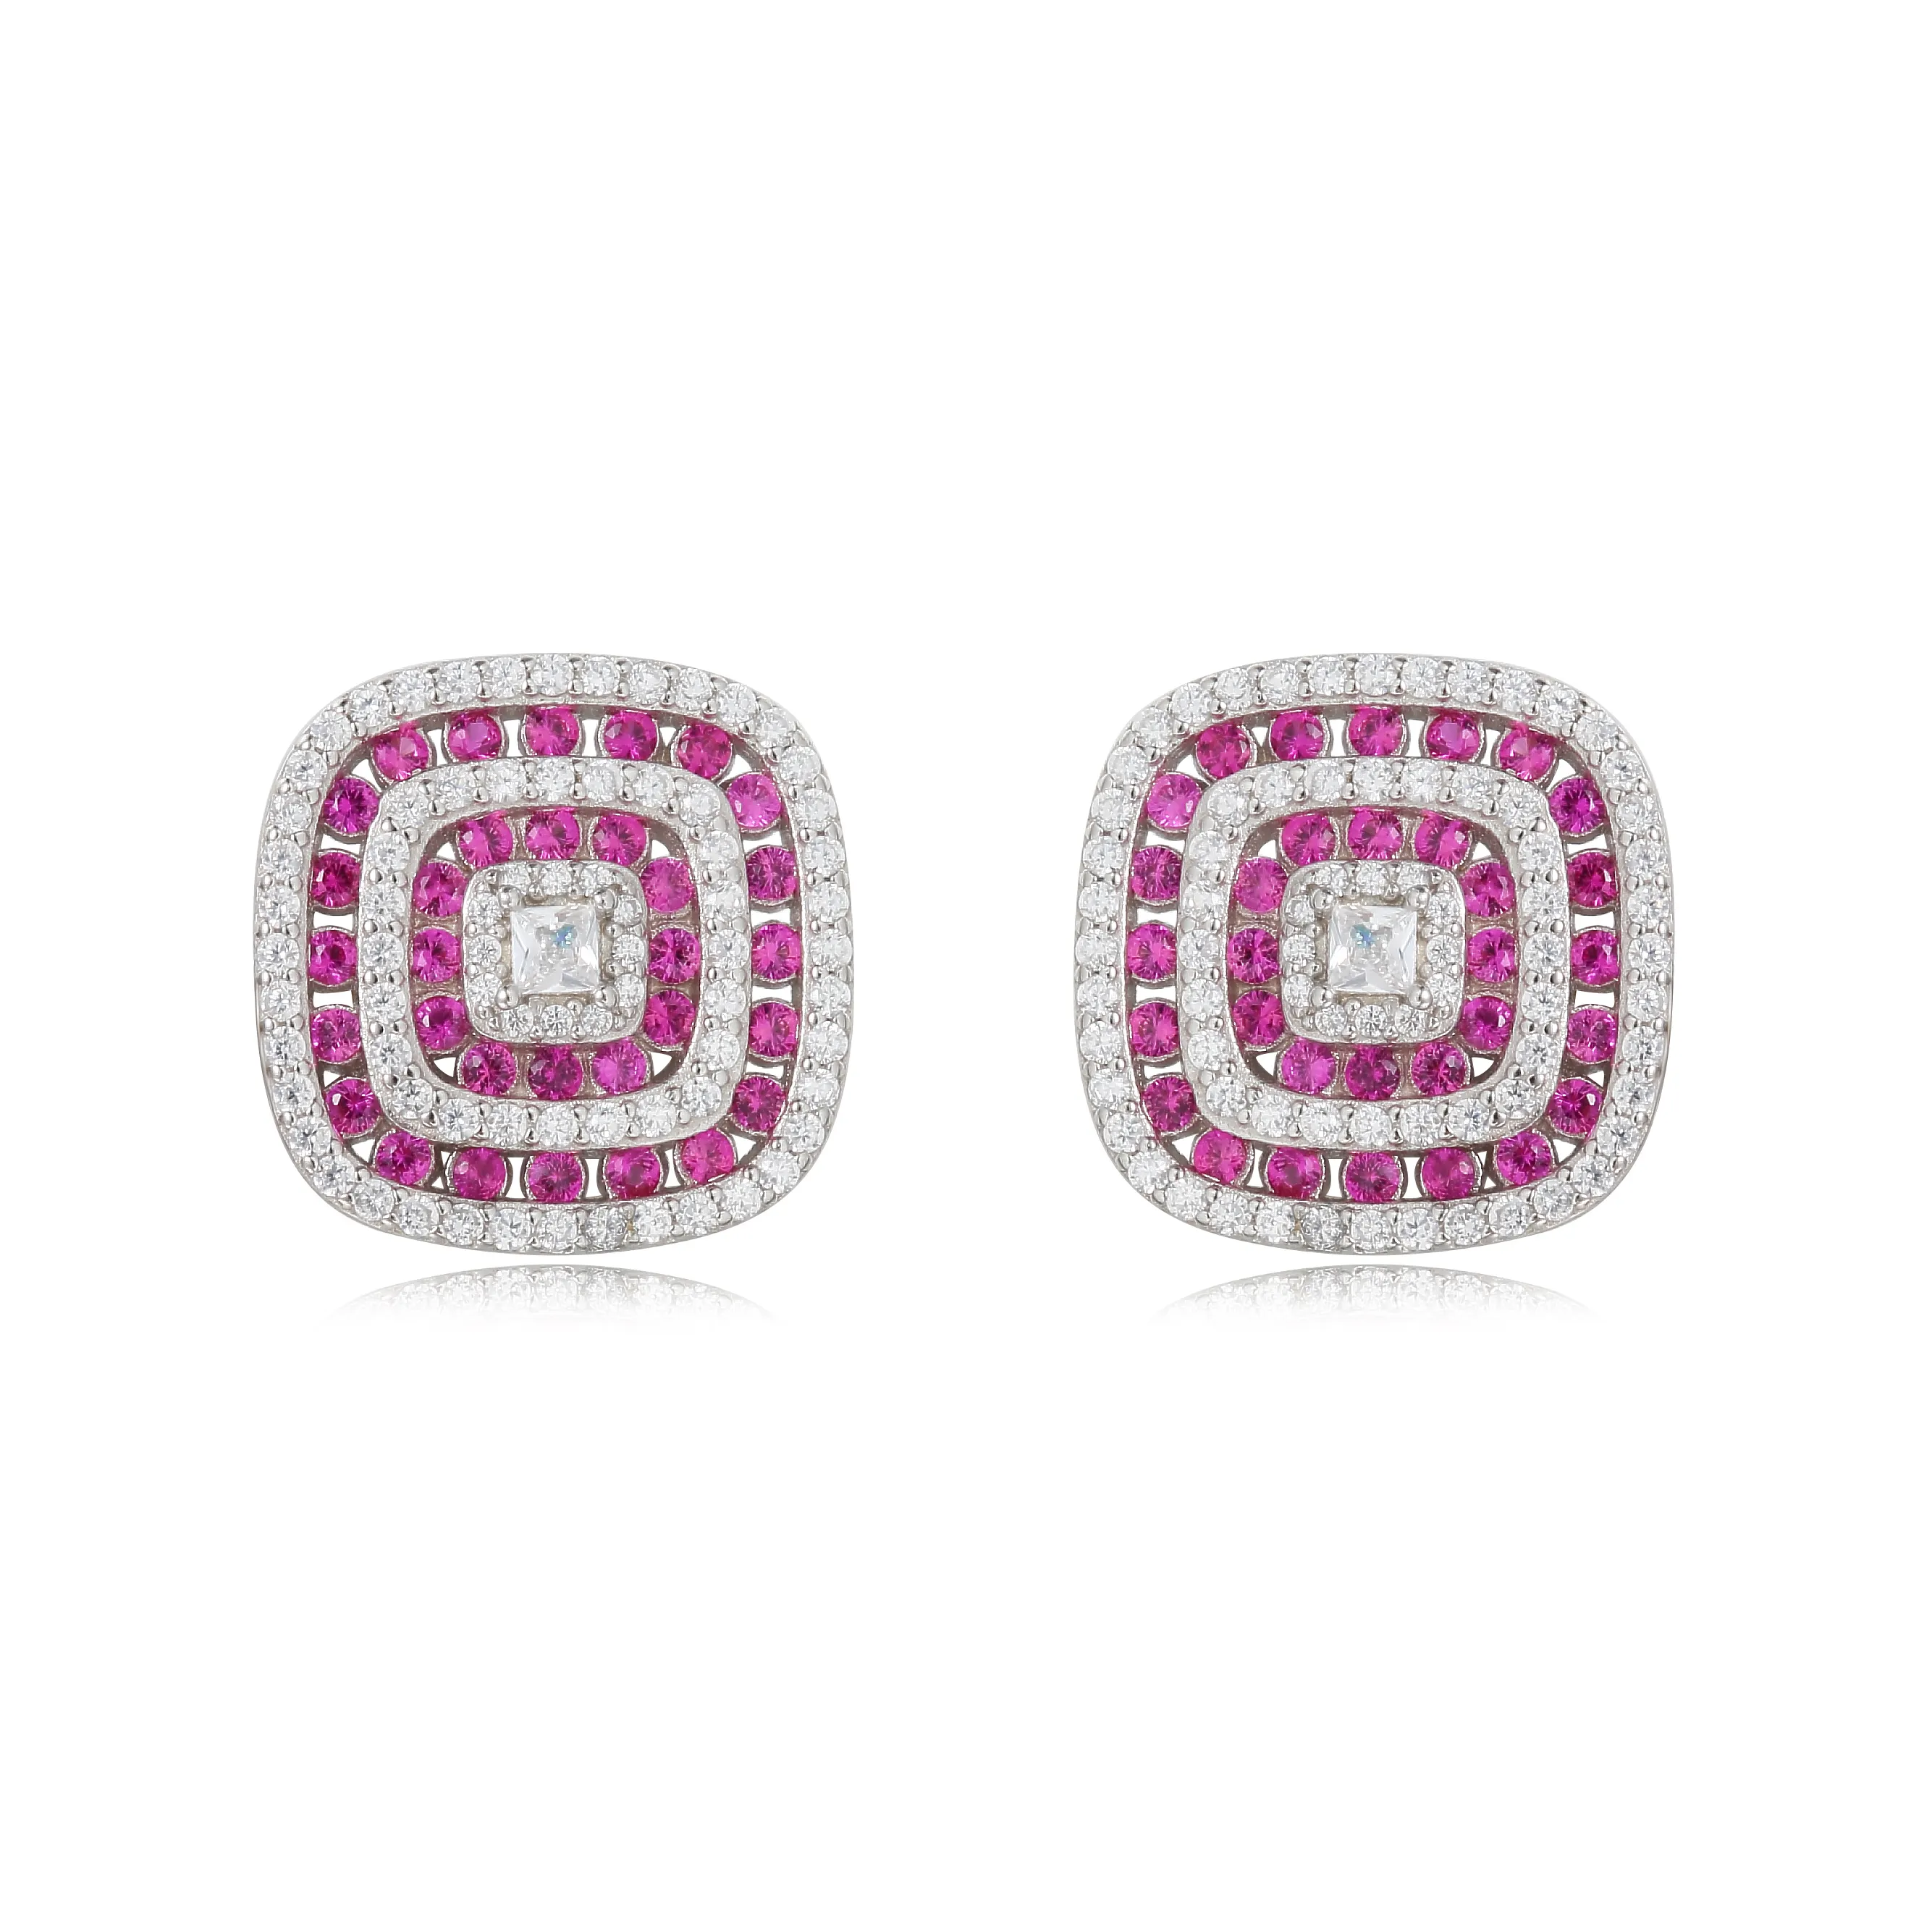 Premium 18k Gold Natural Pink Diamond Earrings Set With Real Diamond Geometric Square Design Earrings